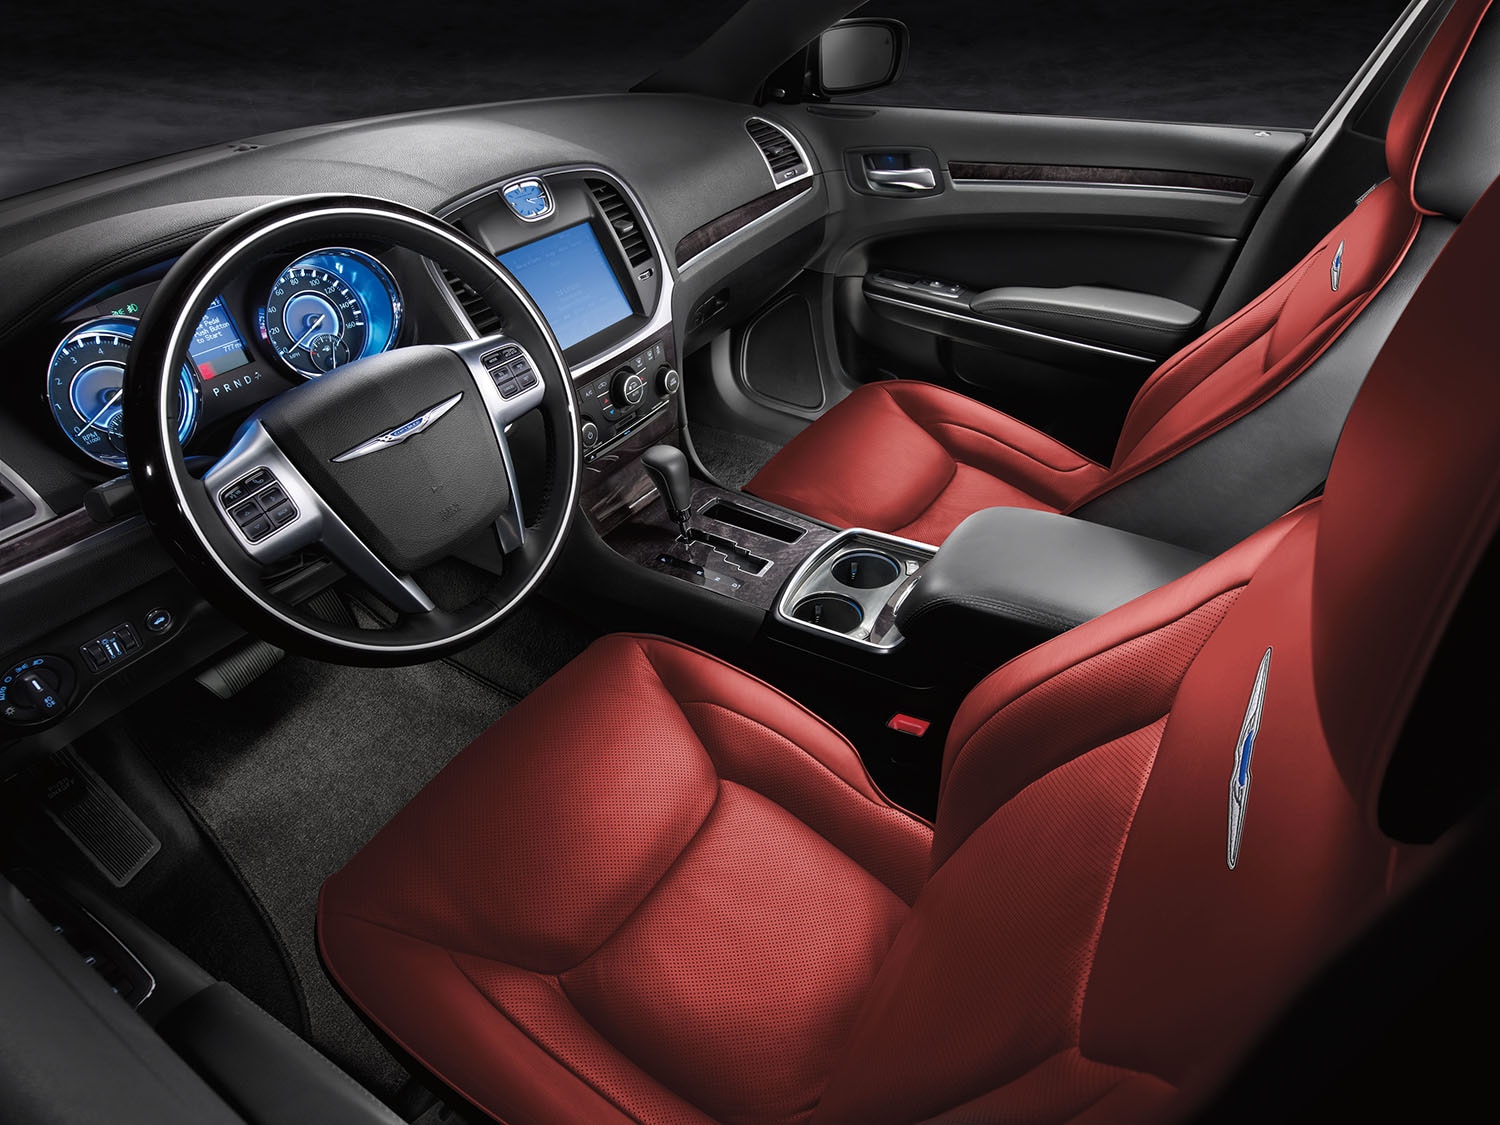 Interior of a Chrysler vehicle with dark red Katzkin leather seats